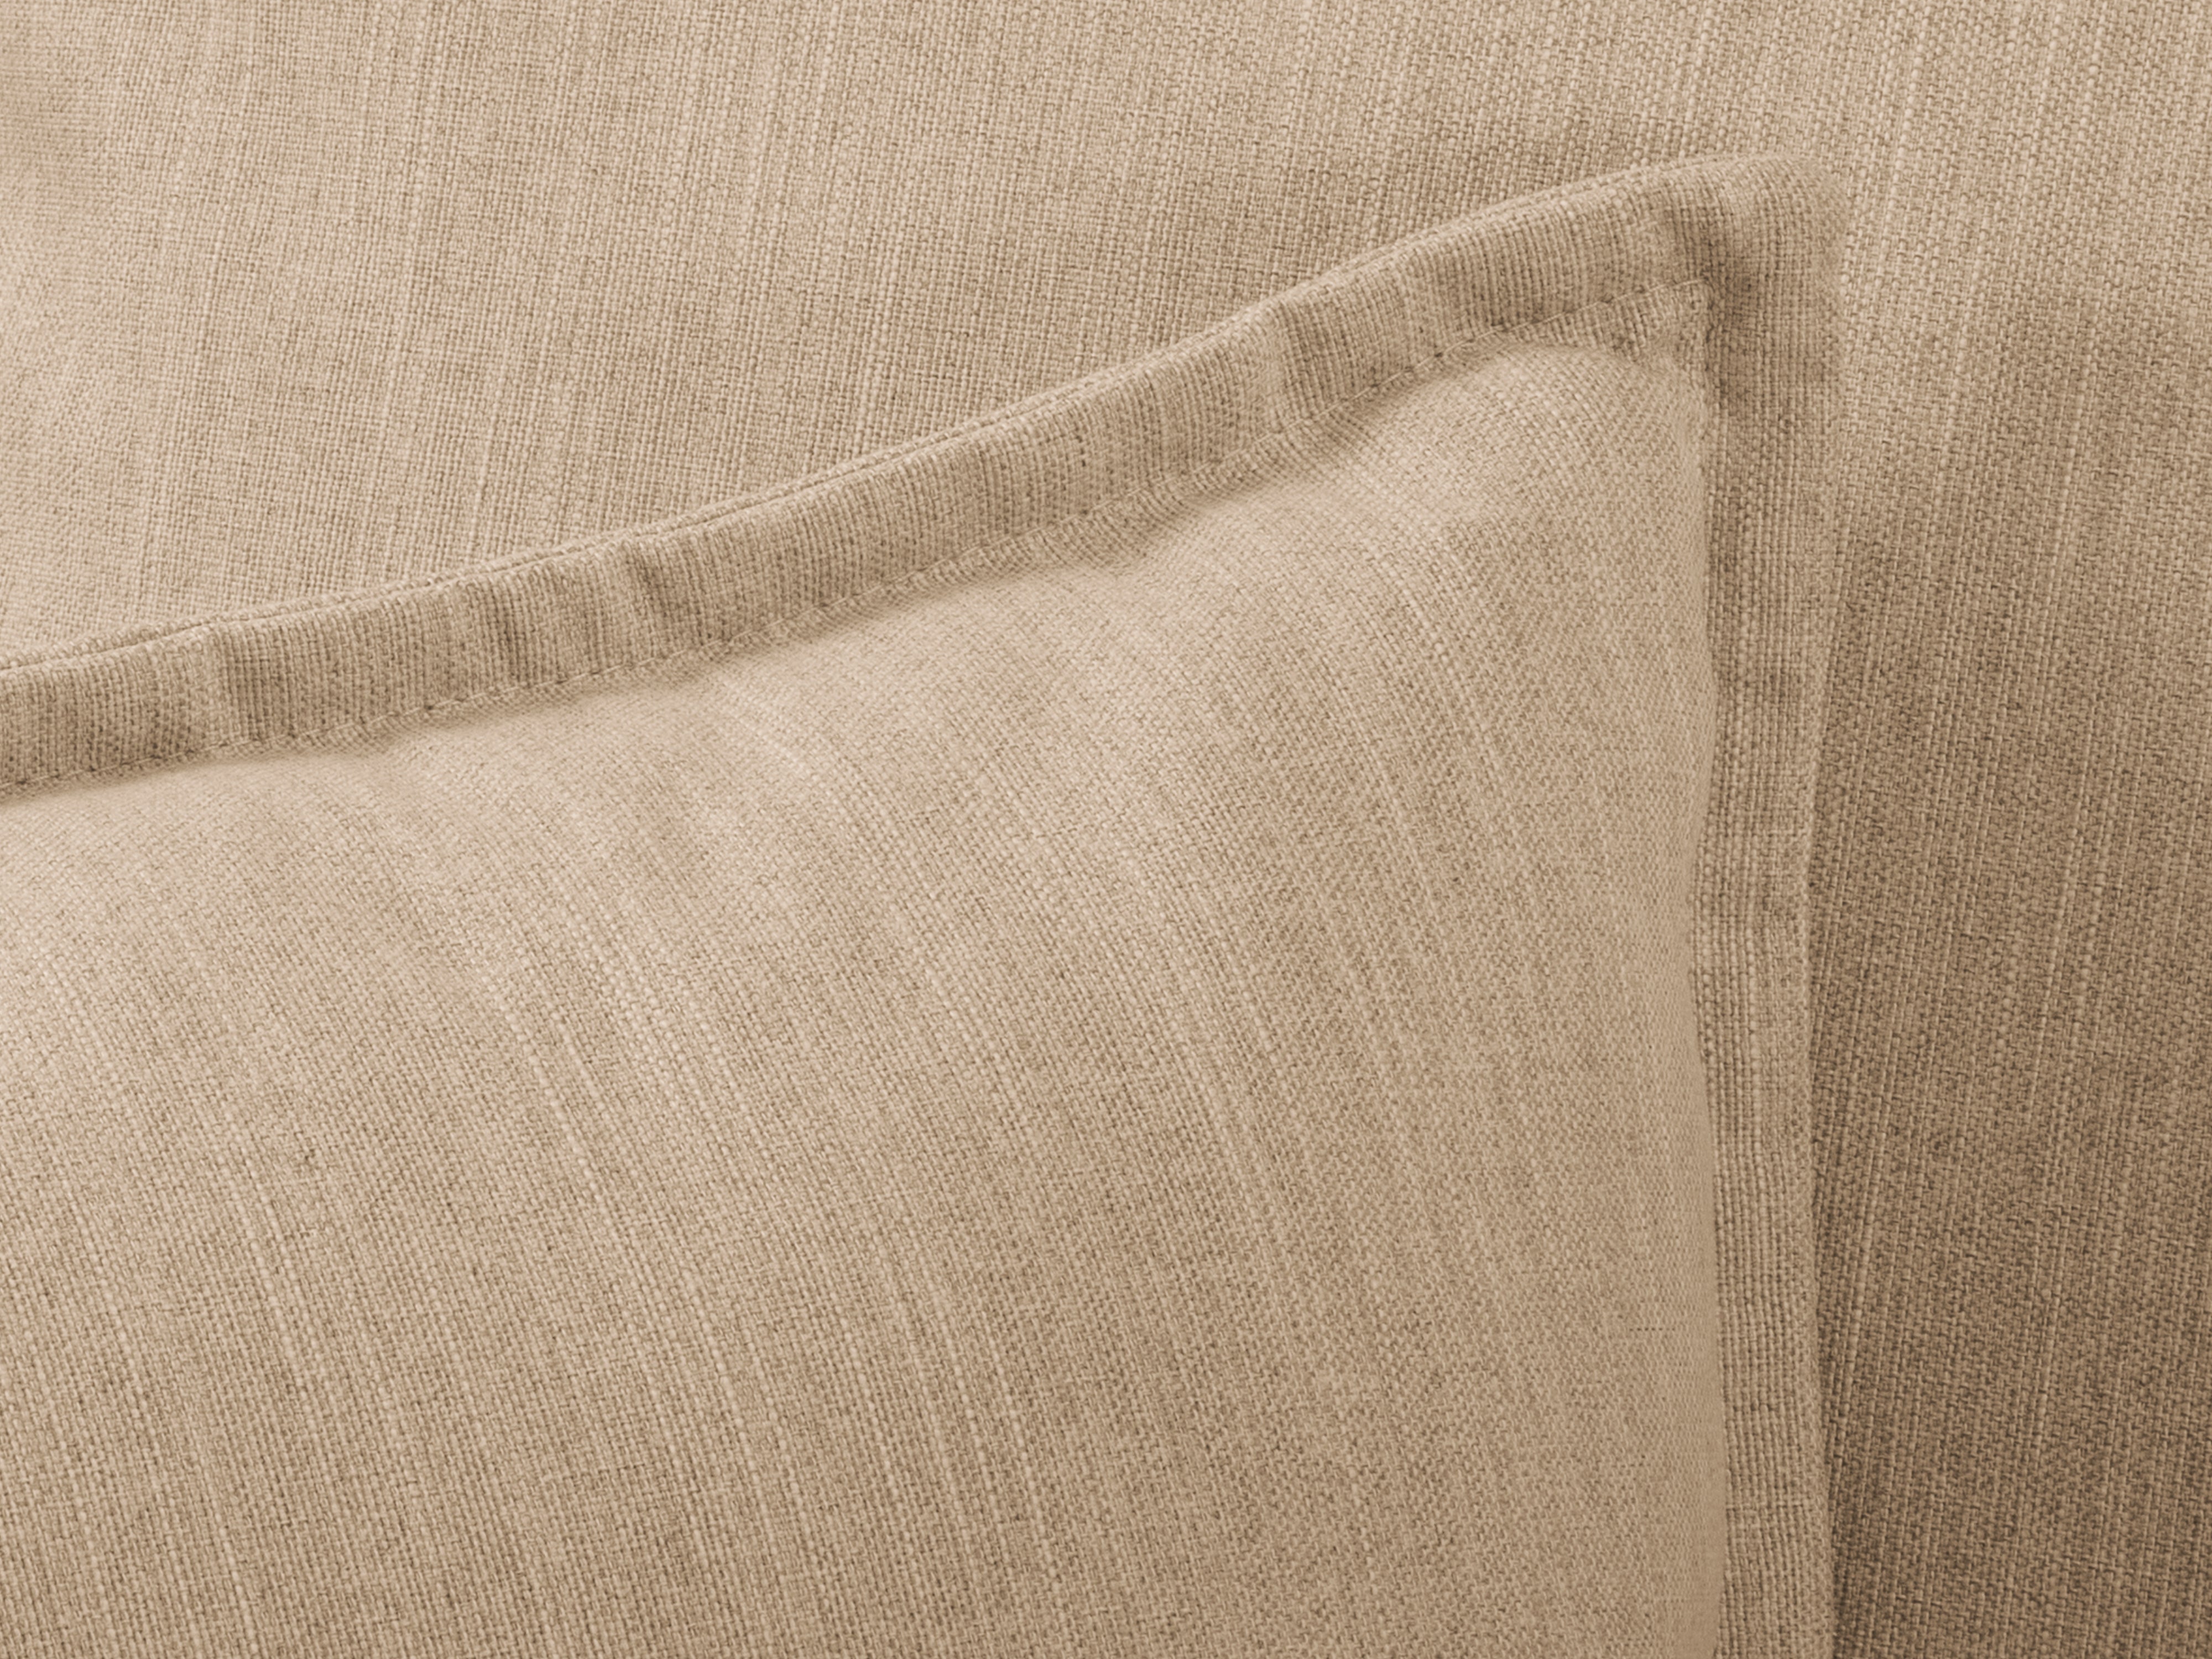 Right corner sofa MARRAM beige with golden base